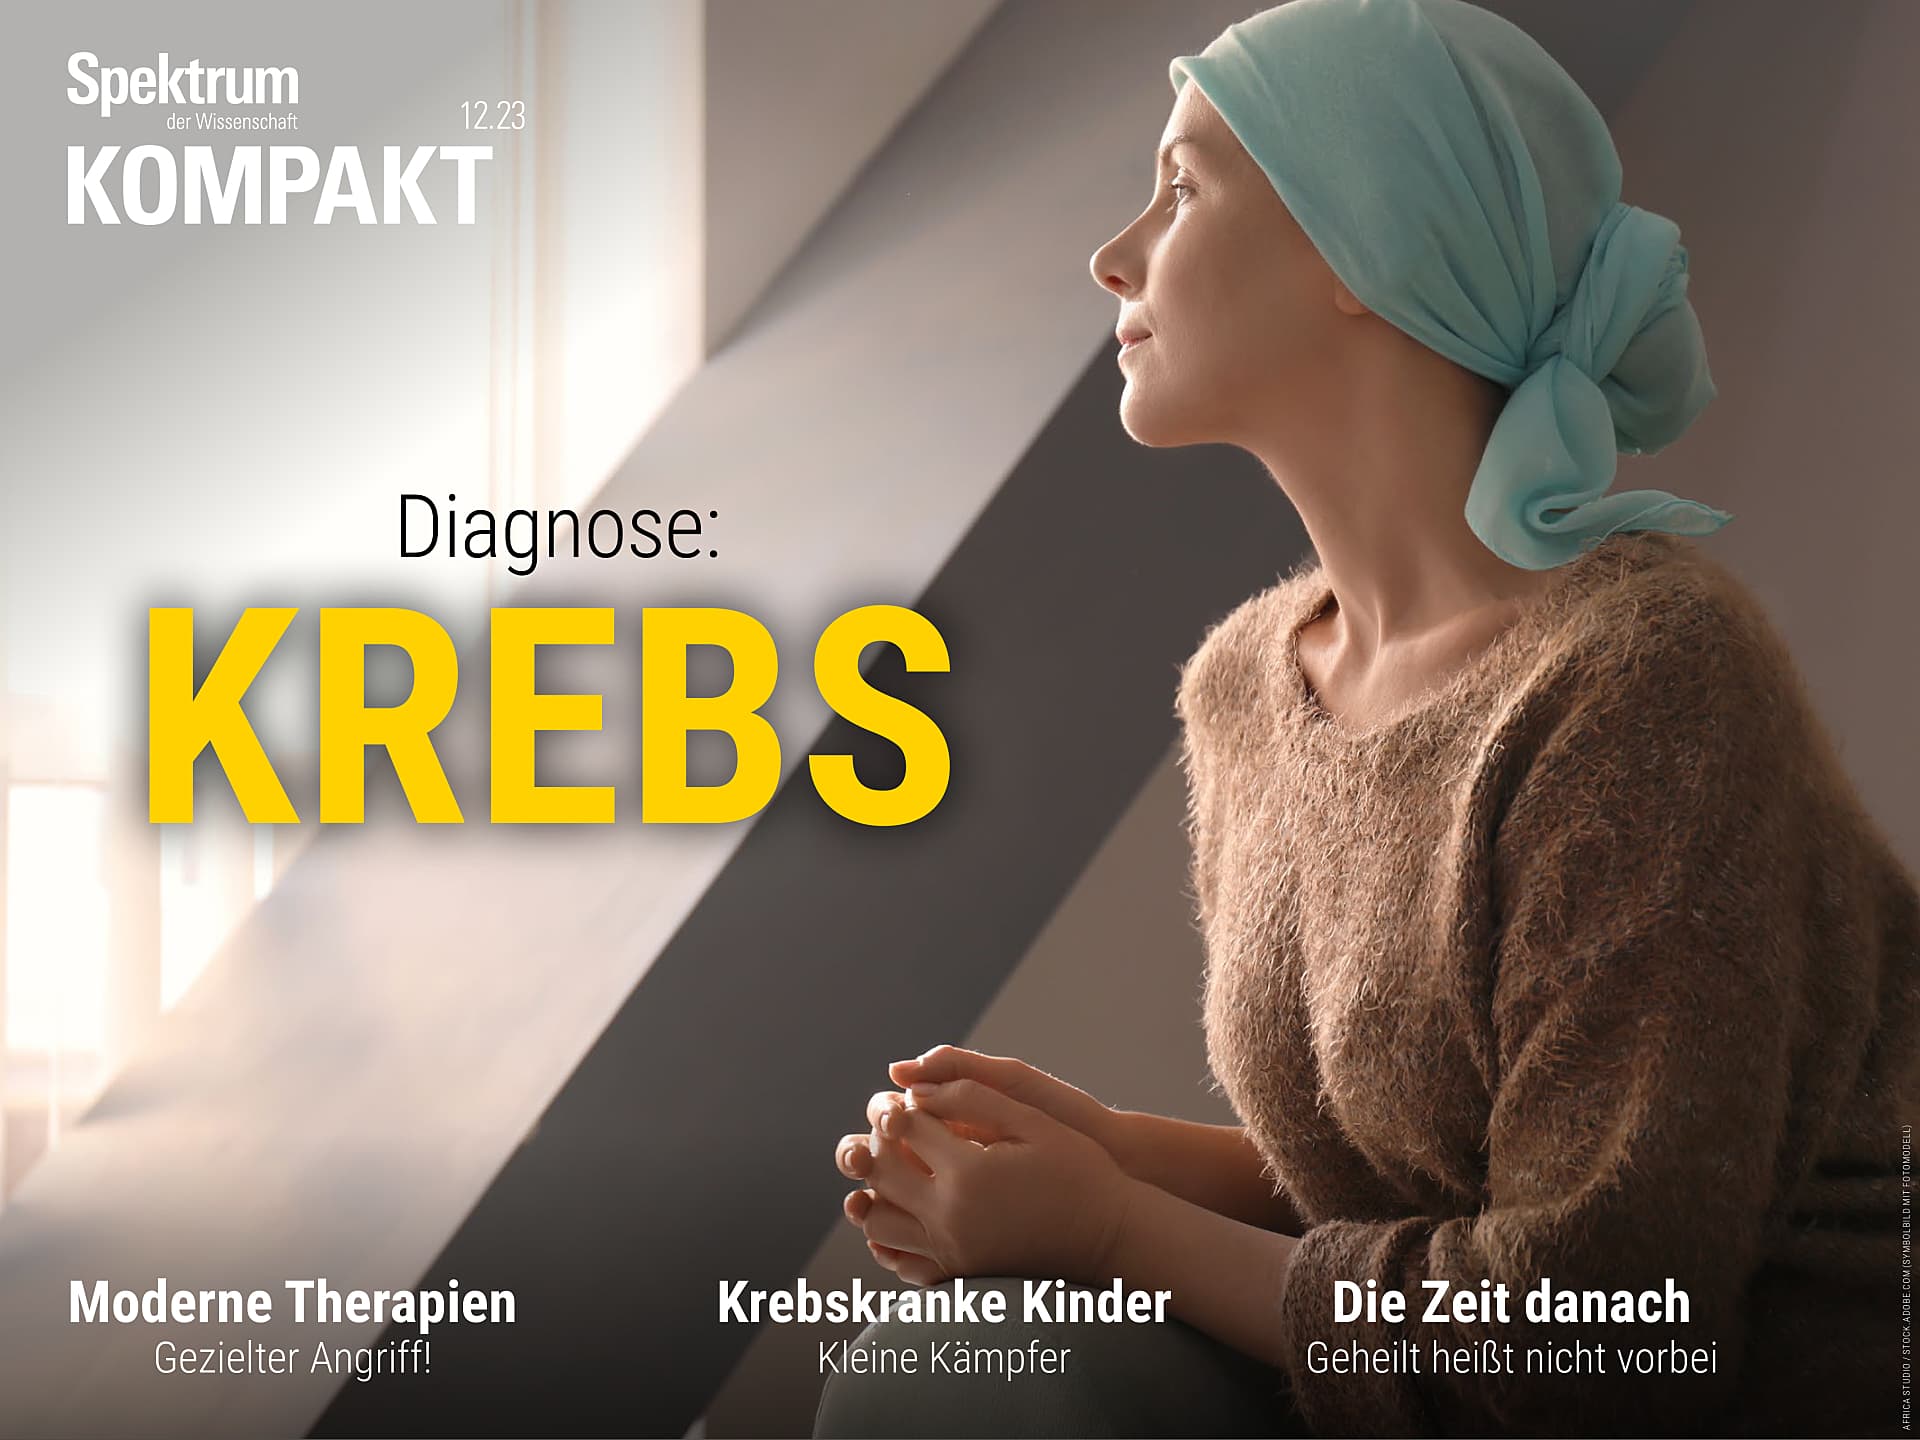 Diagnose: Krebs